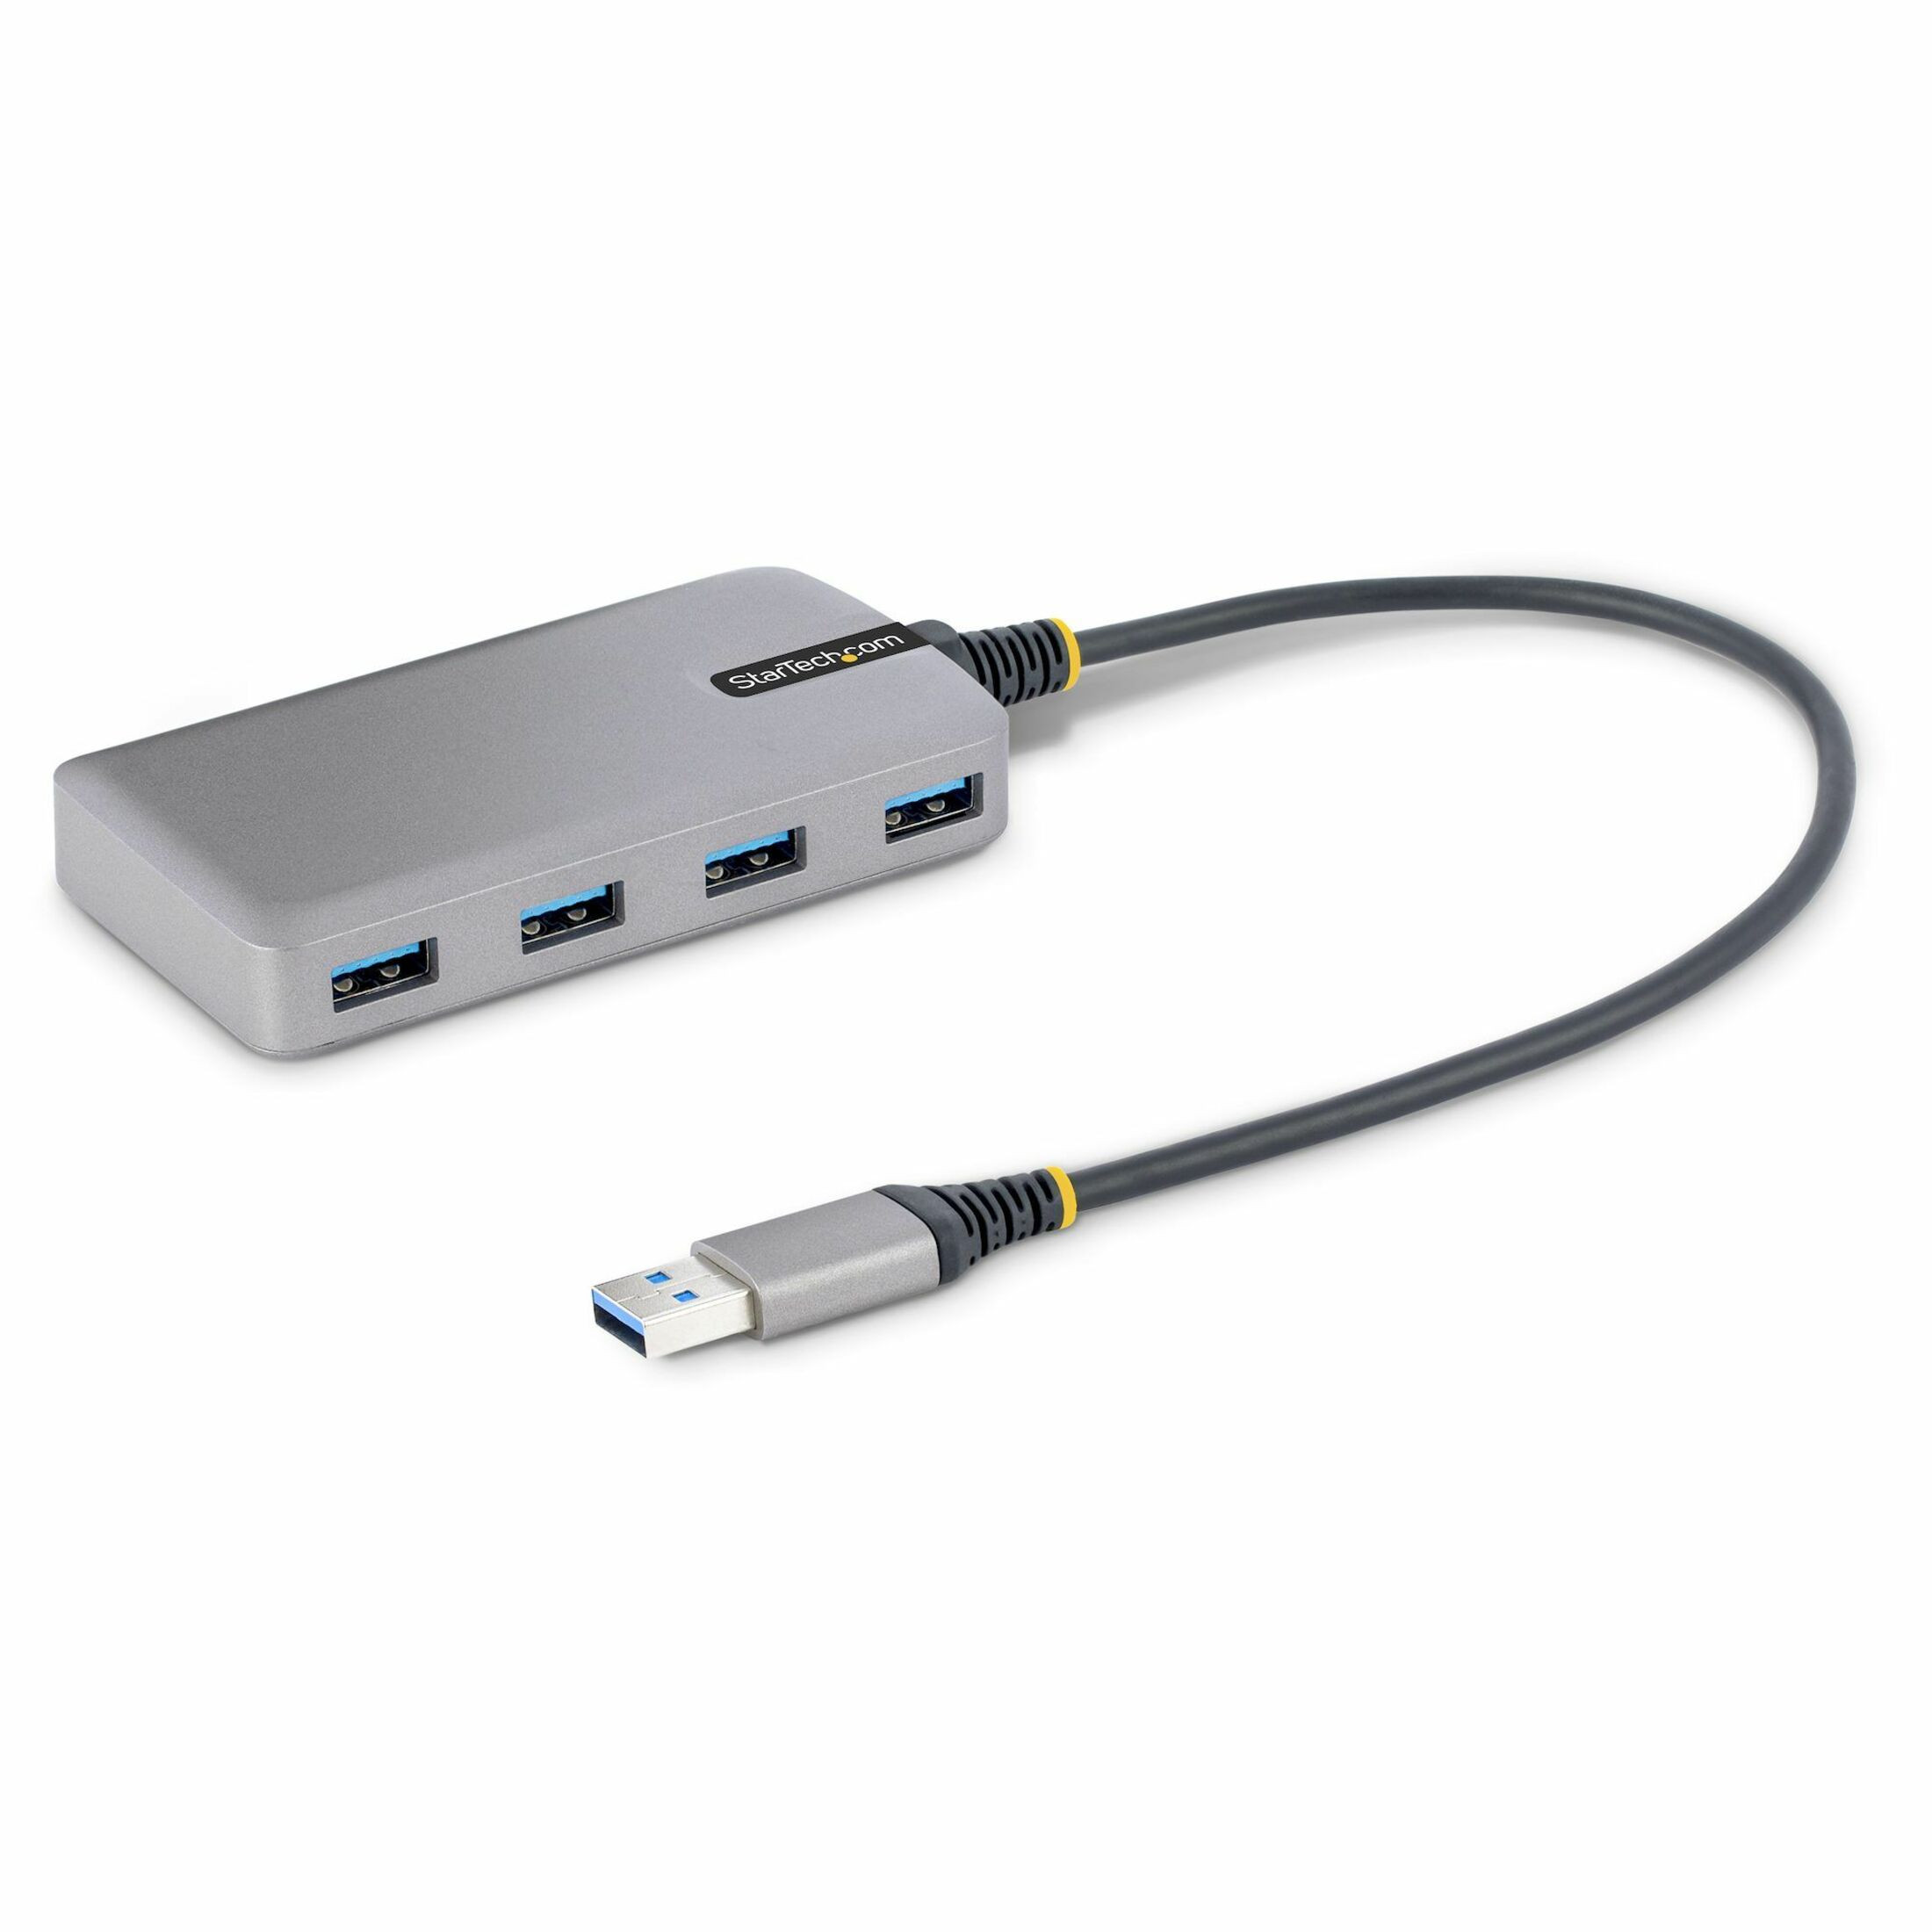 USBFireWire USB Splitter Cable